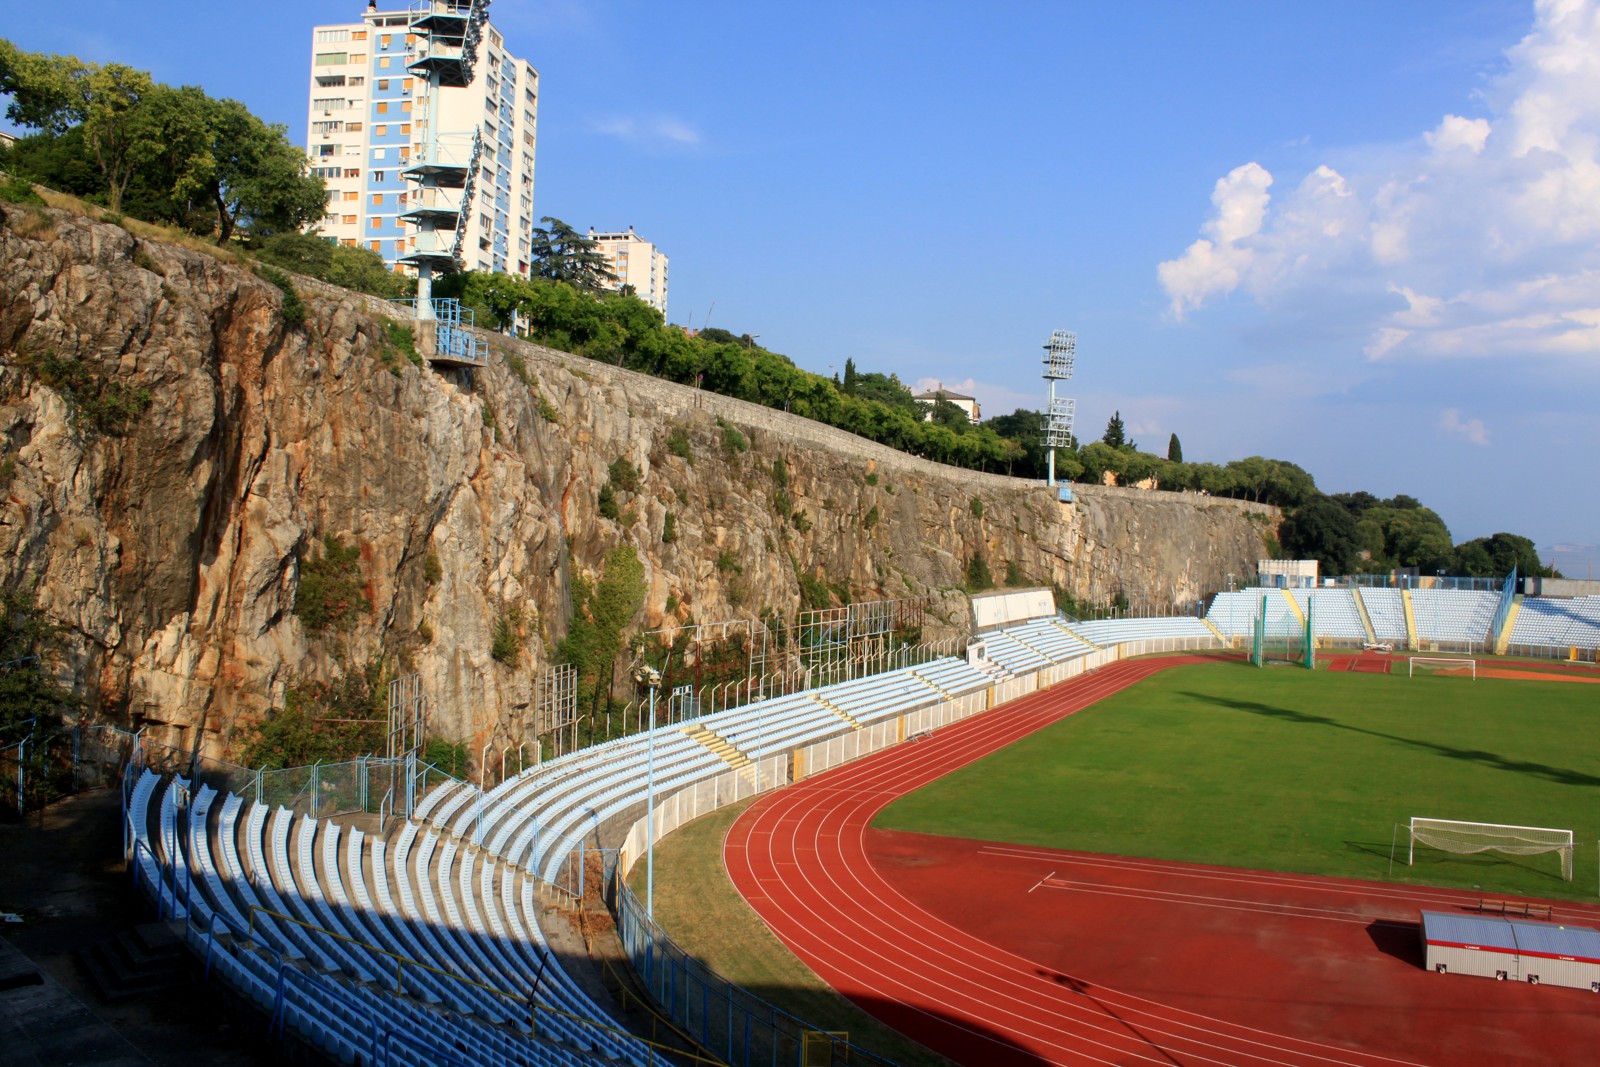 Stadion Kantrida, HNK Rijeka - GNK Dinamo Zagreb 2:2 04.04.…